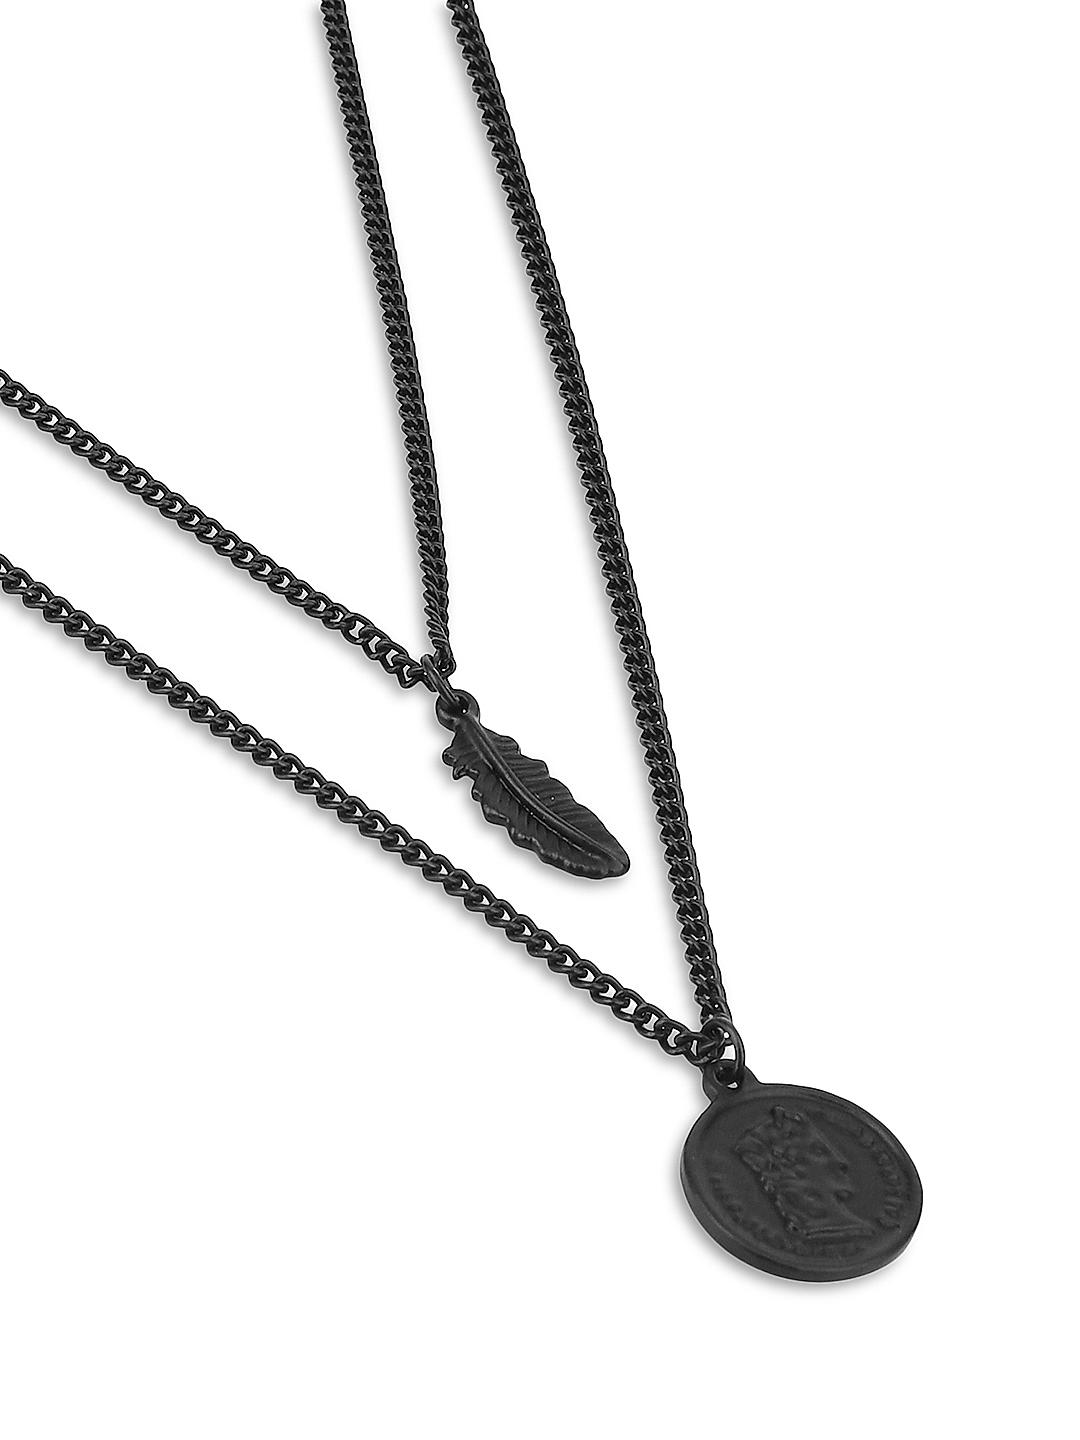 Mens Black Necklaces, Black Necklace for Men, Selection of Black Pendants  for Men, Black Onyx Necklace, Mens Jewelry by Twistedpendant - Etsy